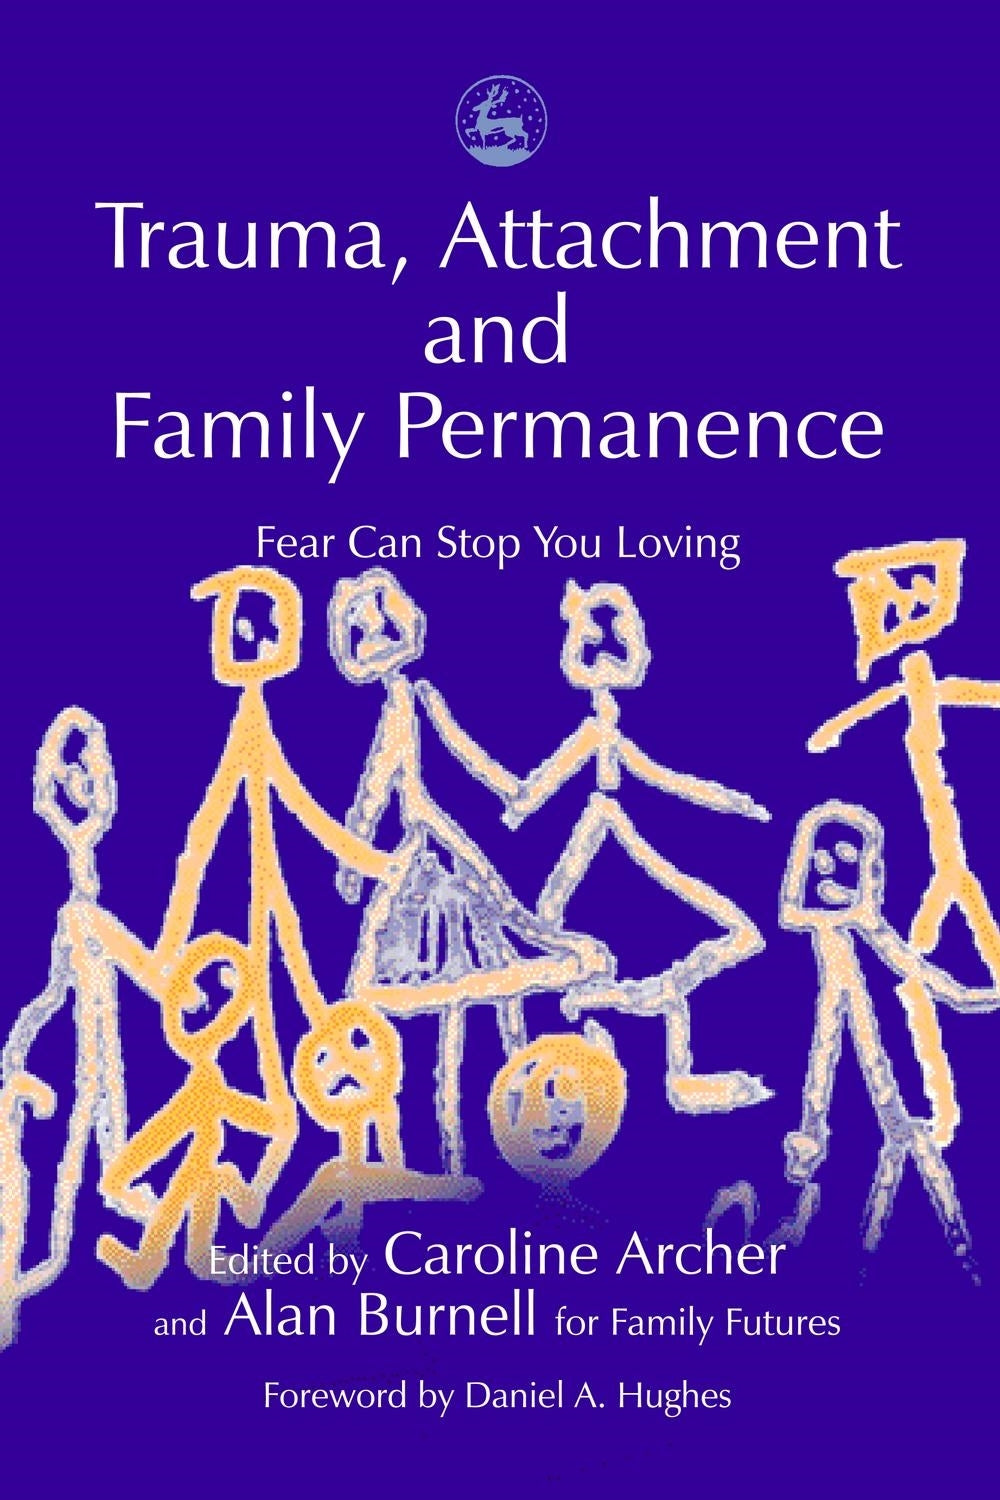 Trauma, Attachment and Family Permanence by Caroline Archer, Daniel Hughes